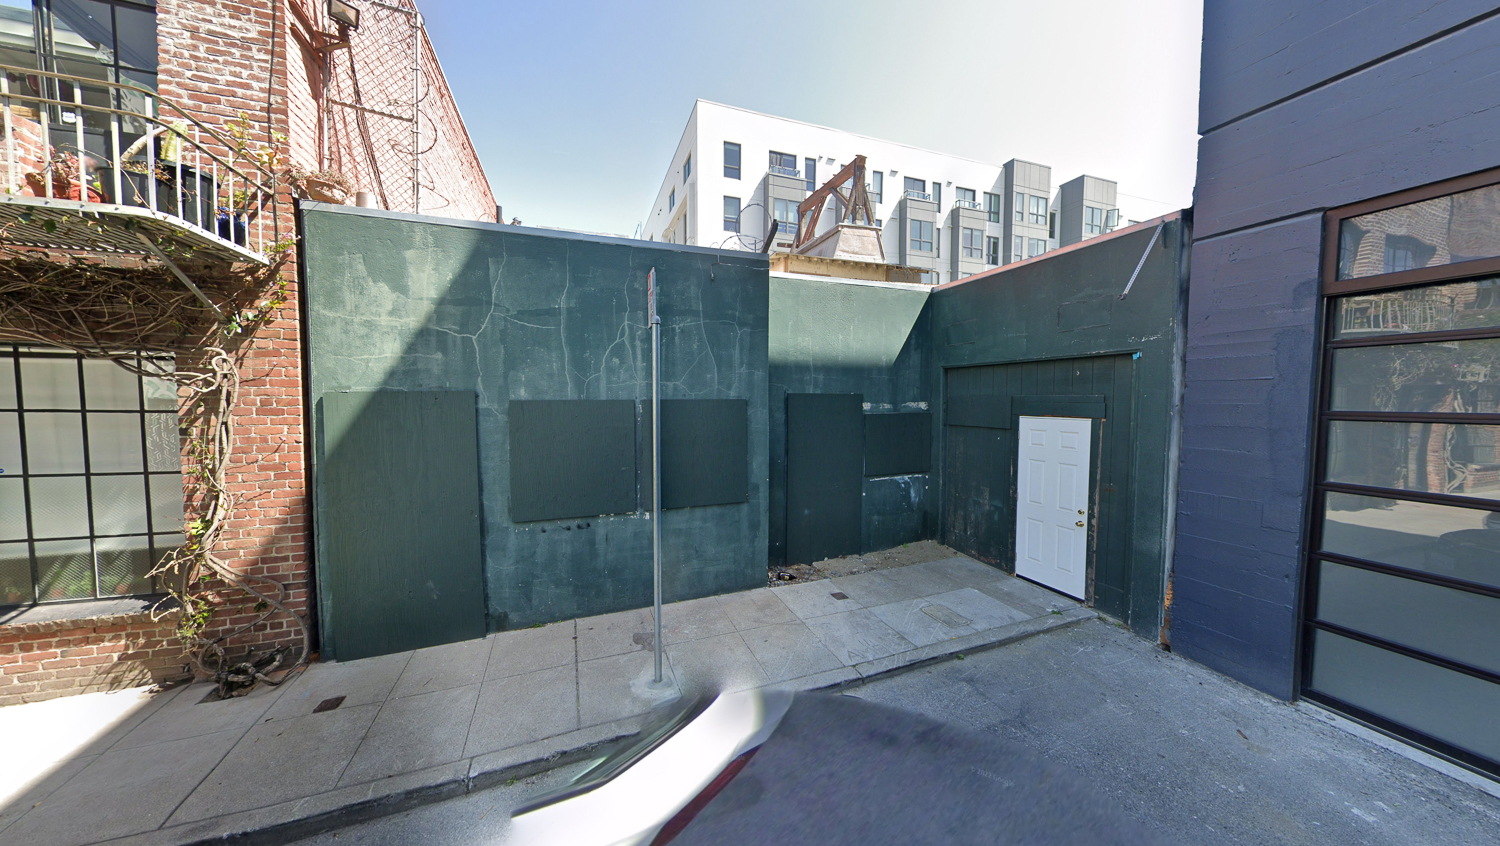 61 Rodgers Street, image via Google Street View